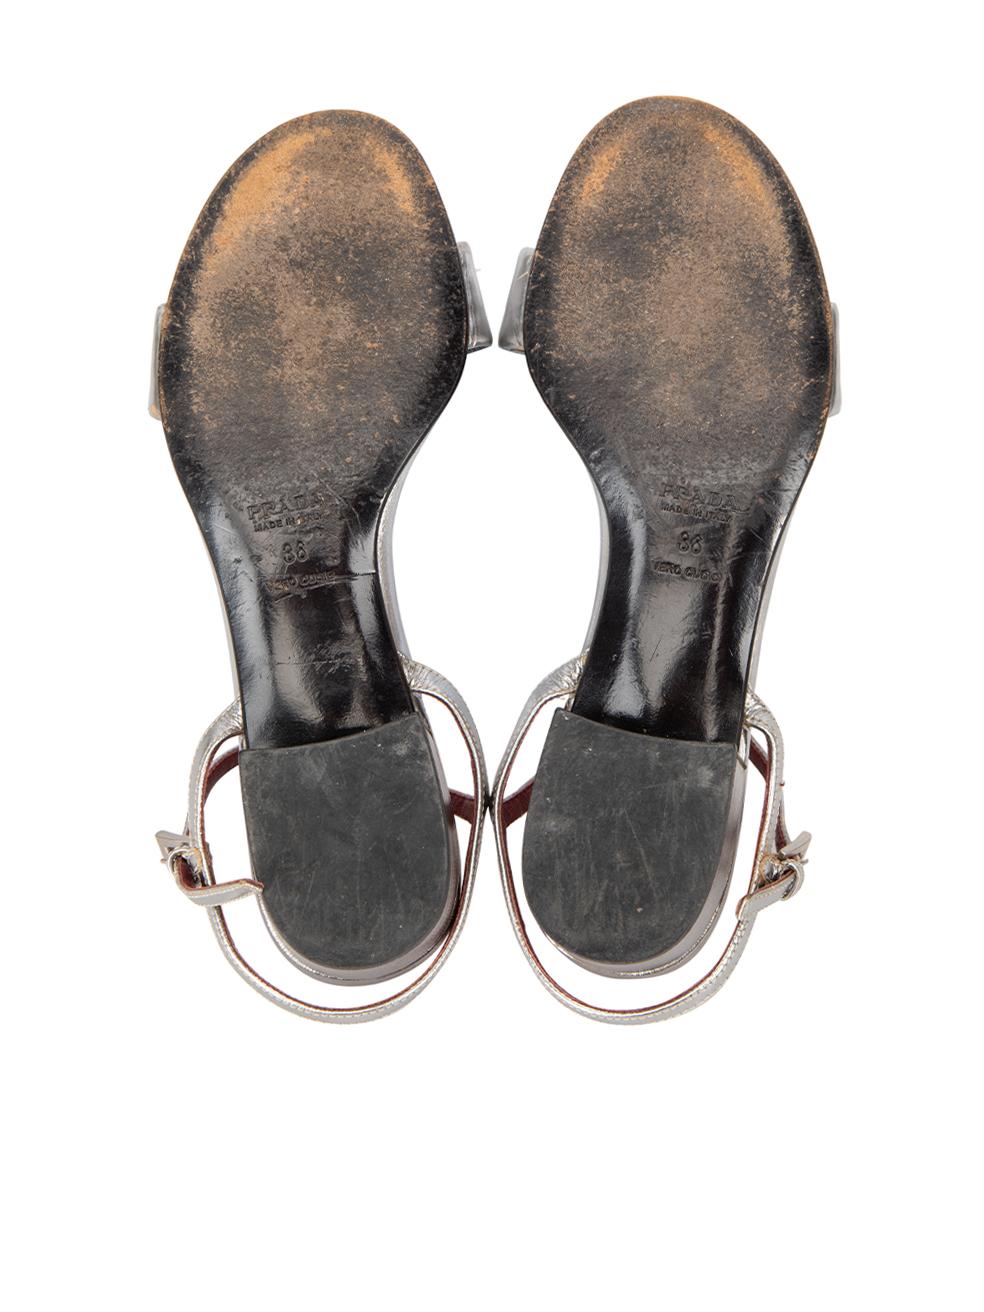 Prada Women's Silver Leather Kitten Heel Sandals For Sale 5